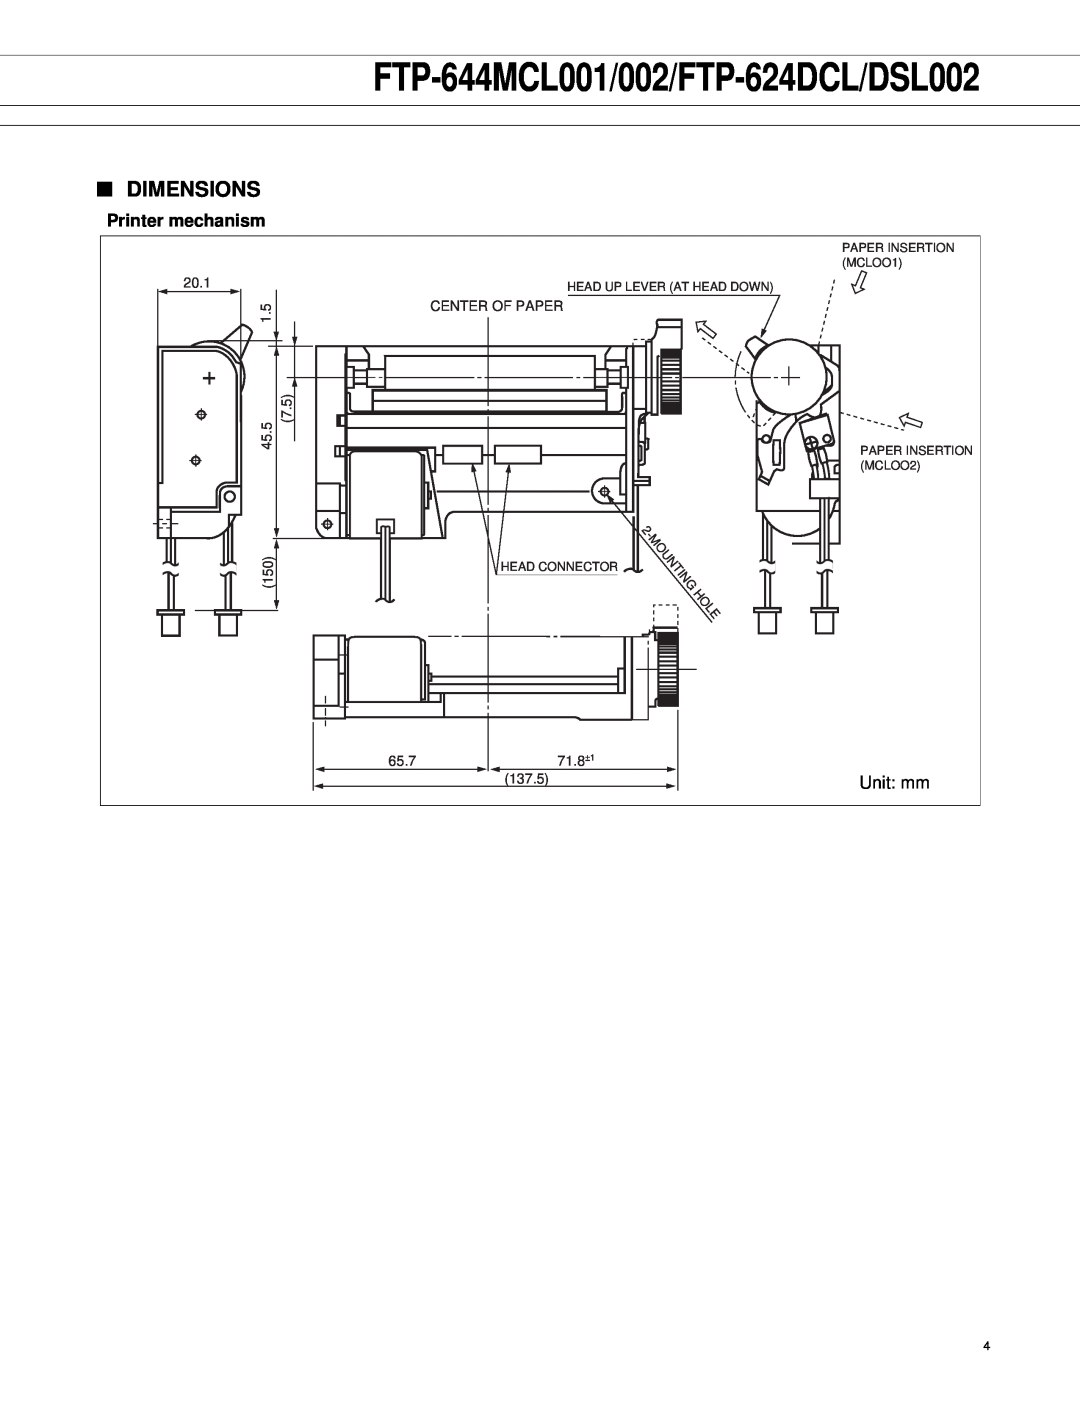 Fujitsu FTP-644MCL002 manual Dimensions, FTP-644MCL001/002/FTP-624DCL/DSL002, Printer mechanism 